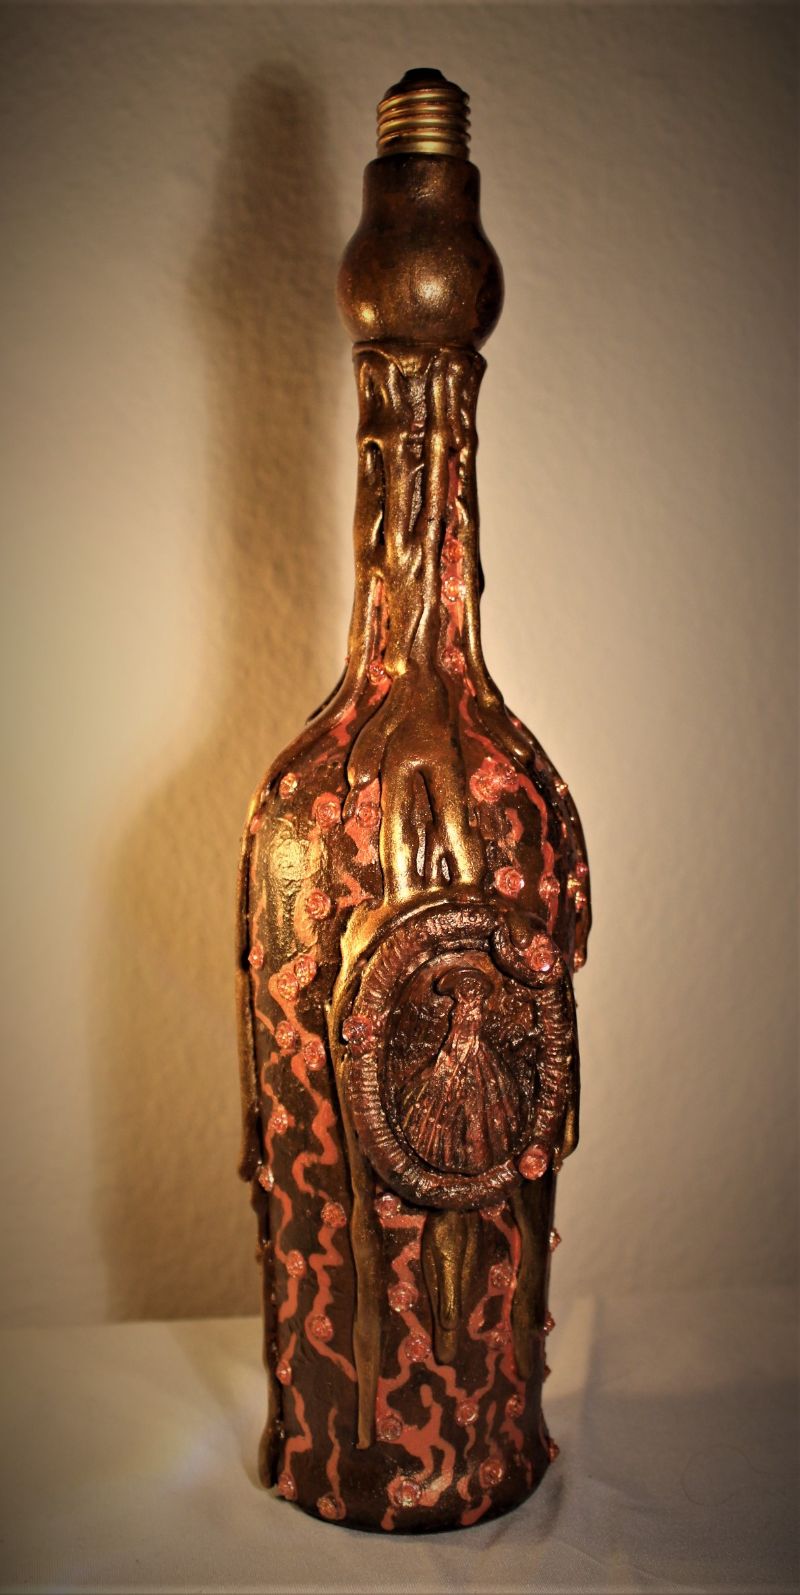  - Dekoflasche VIKTORIA Steampunk Upcycling Flasche Geschenk Viktorianisch Recycling Vintage